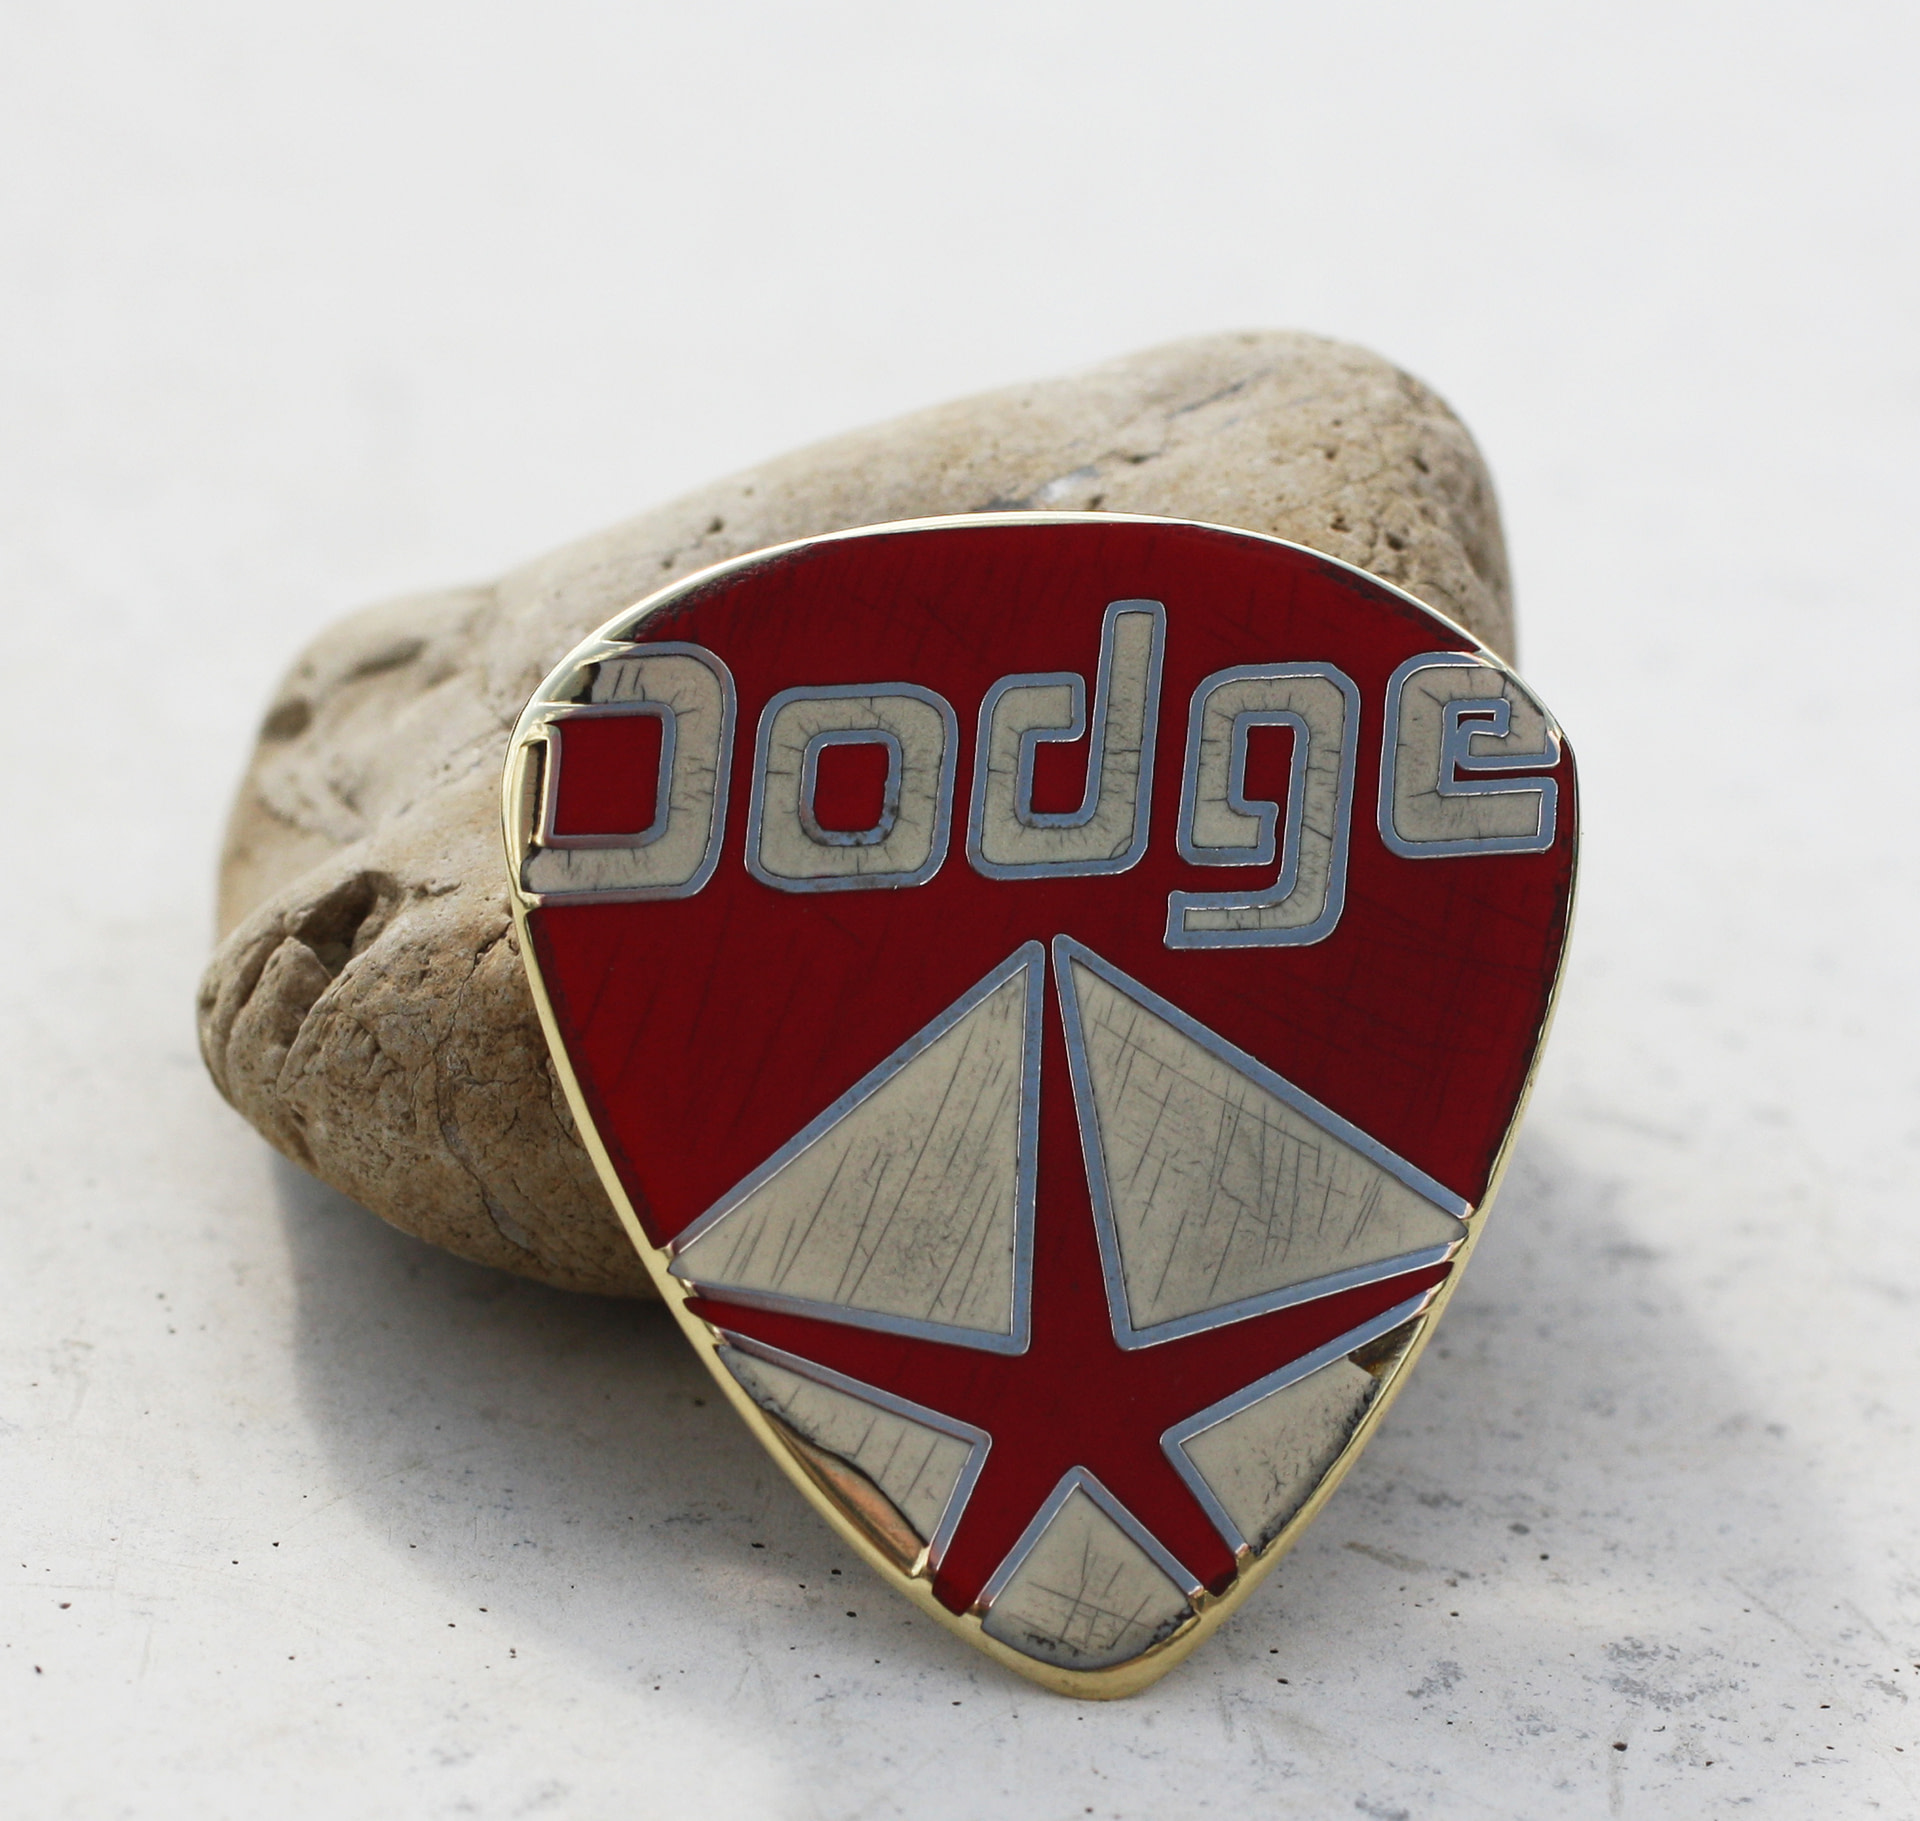 dodge coins